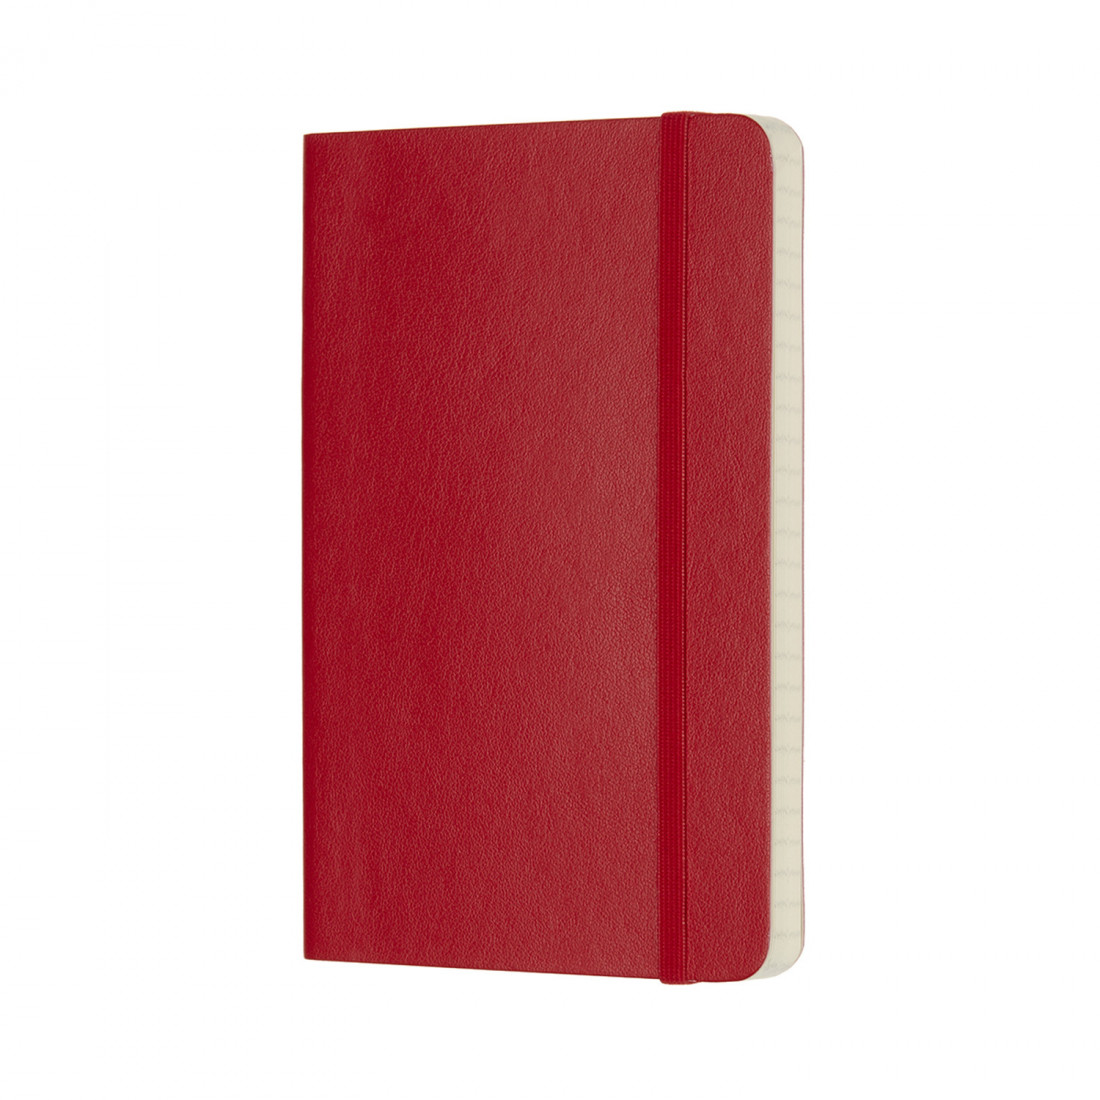 Notebook Pocket 9x14 Squared Scarlet Red Soft Cover Moleskine